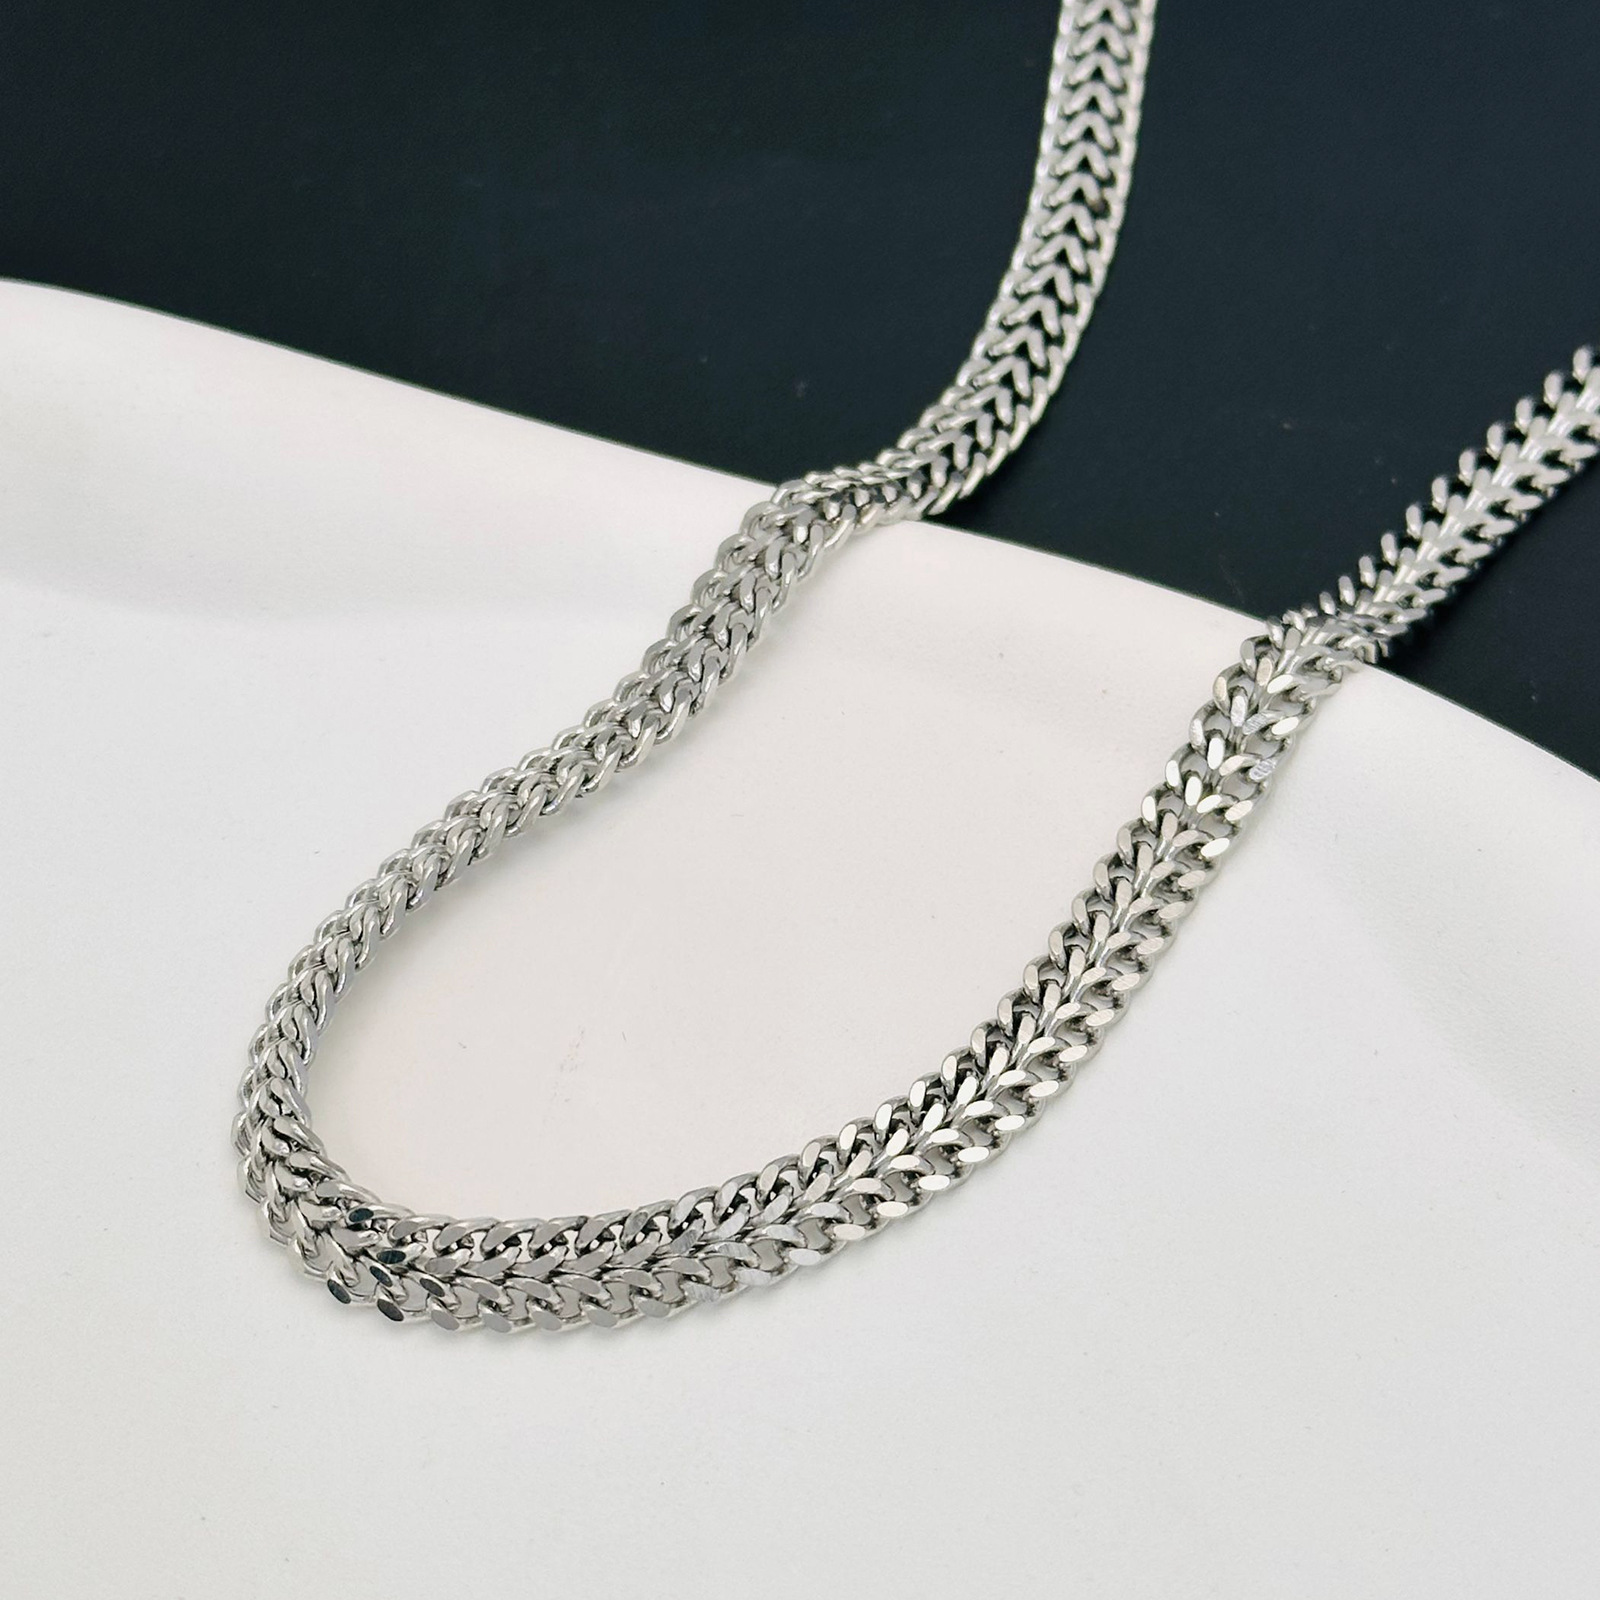 Necklace - Steel color -45cm